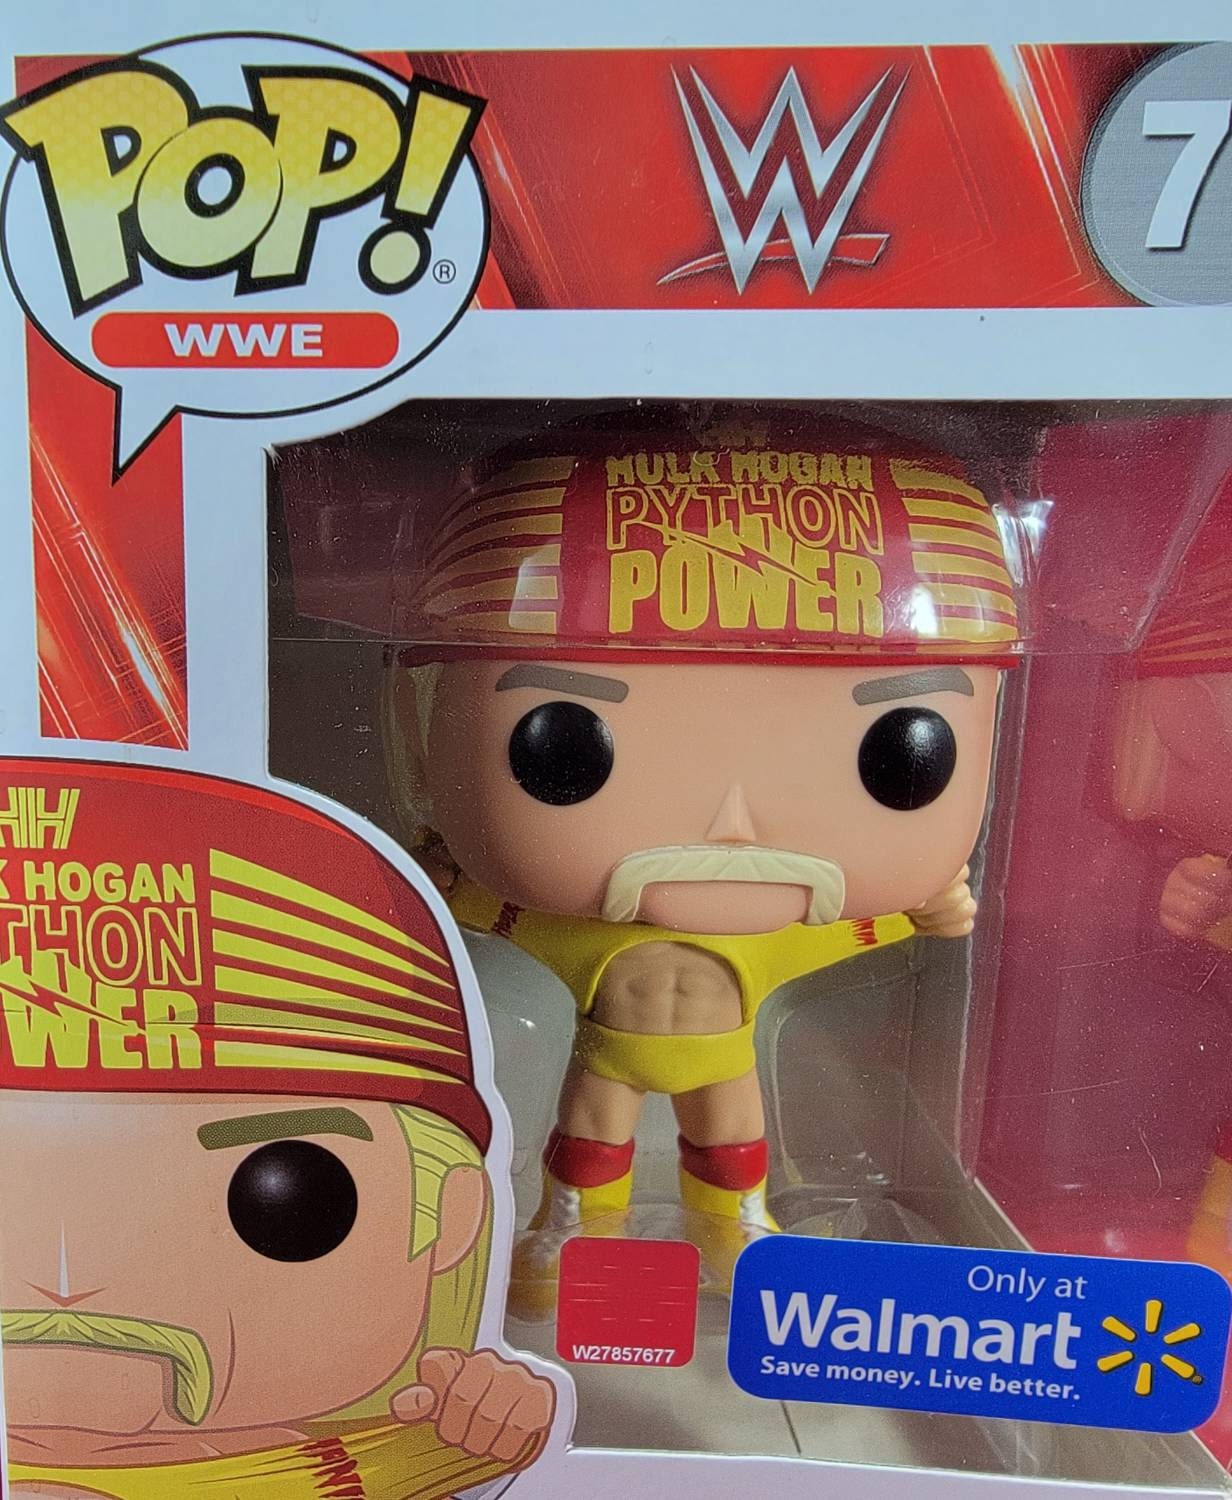 Hulk Hogan Wal-Mart exclusive # 71 funko